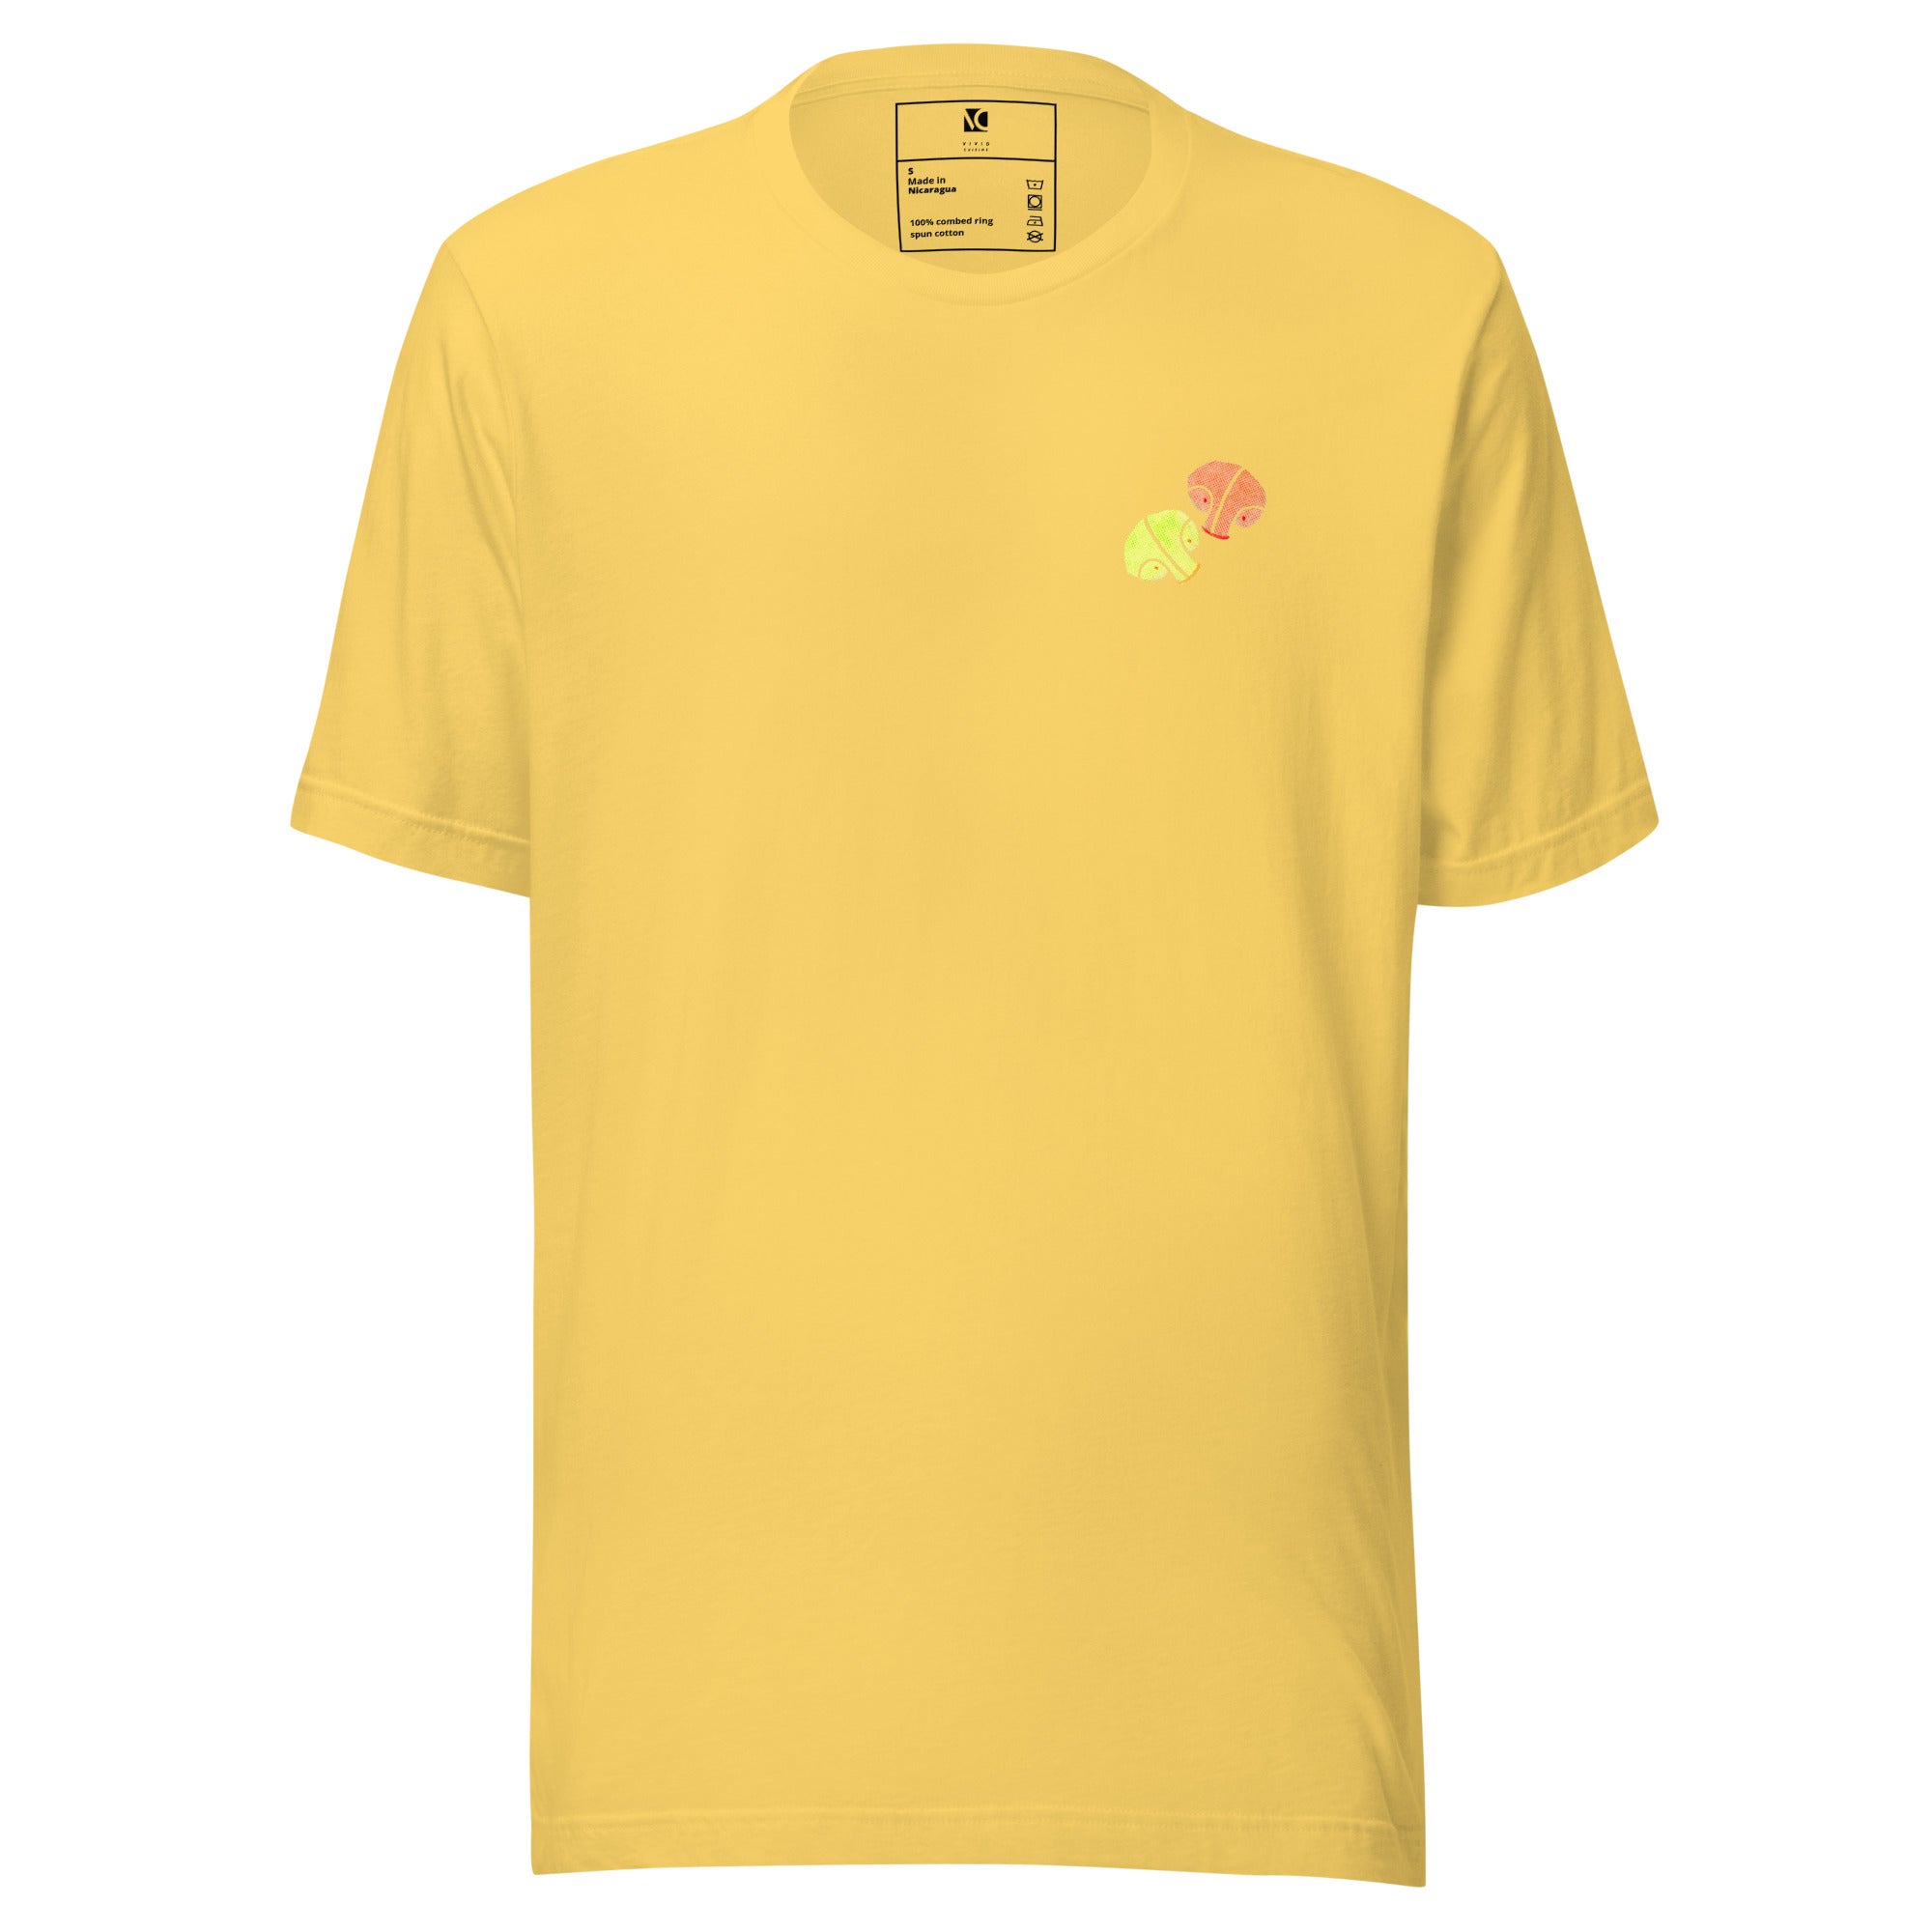 Mini Champiñiones - Unisex T-Shirt